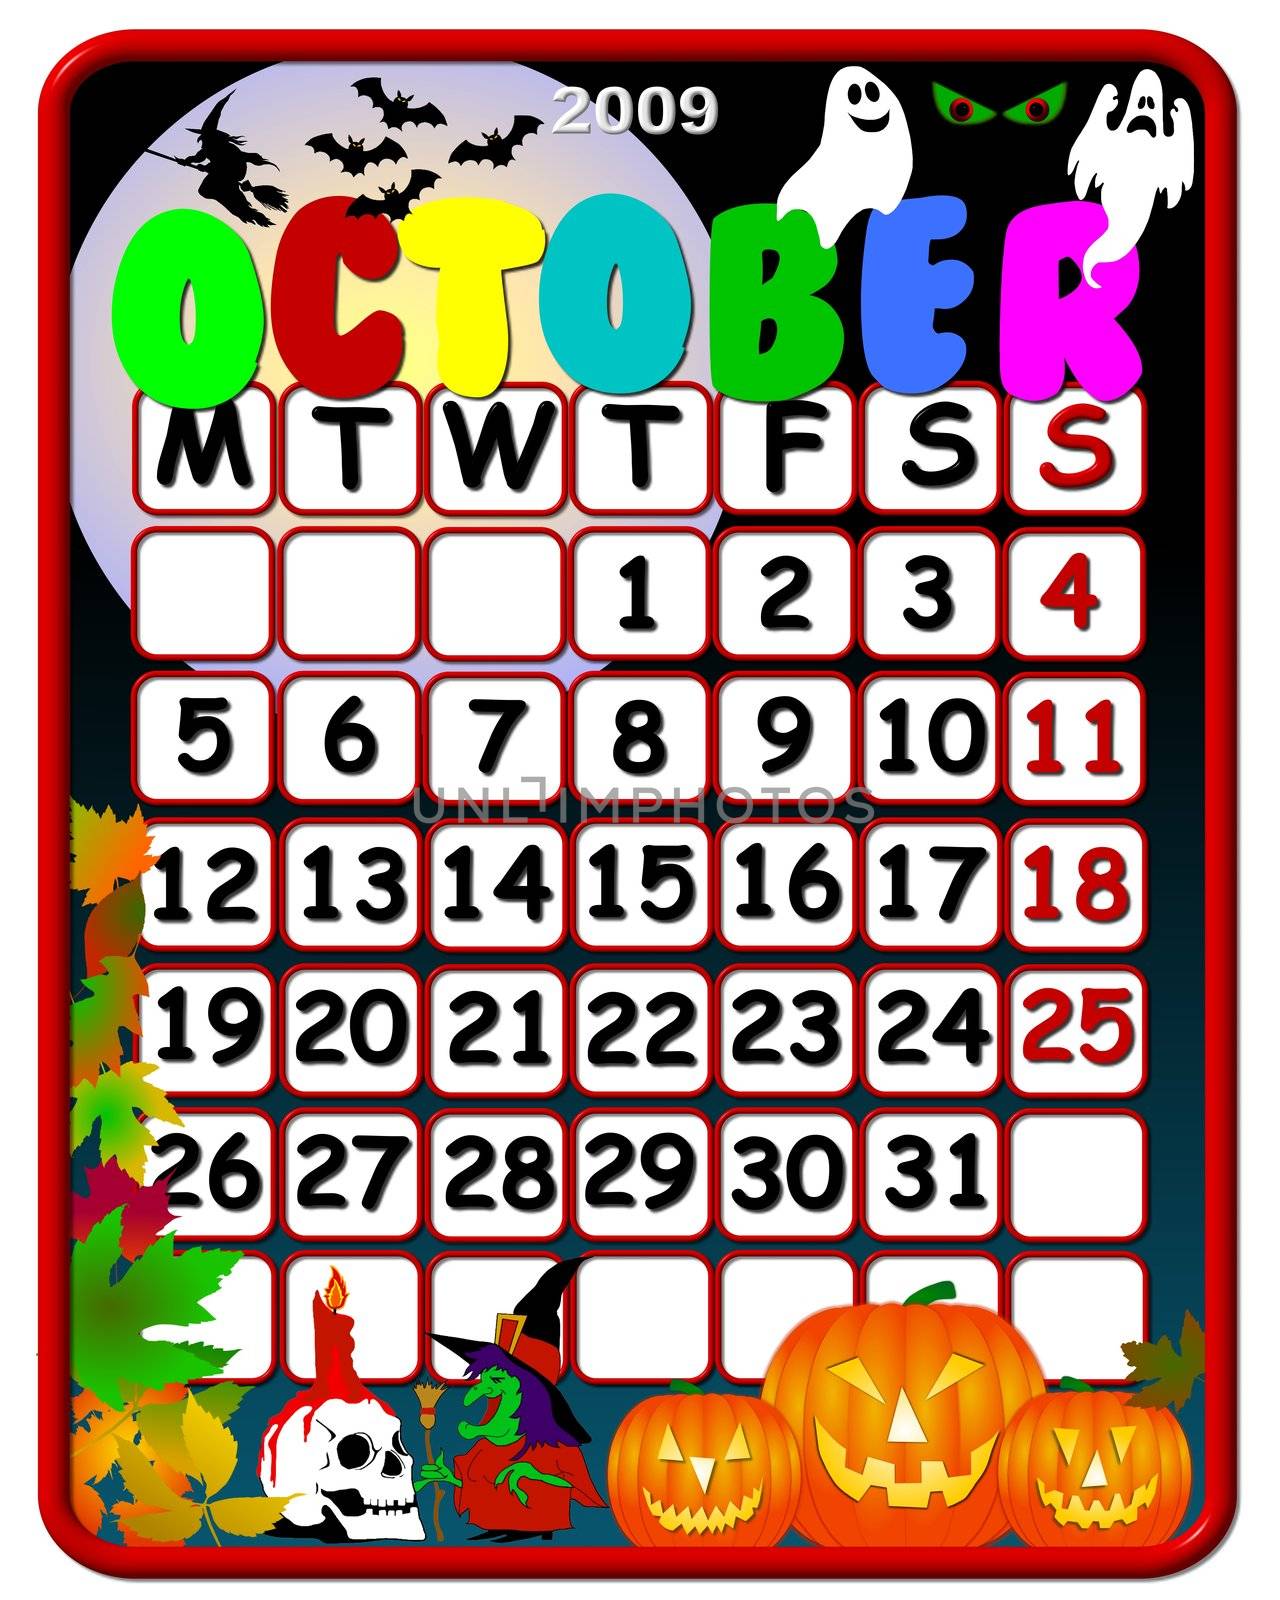 funny calendar october 2009 by peromarketing